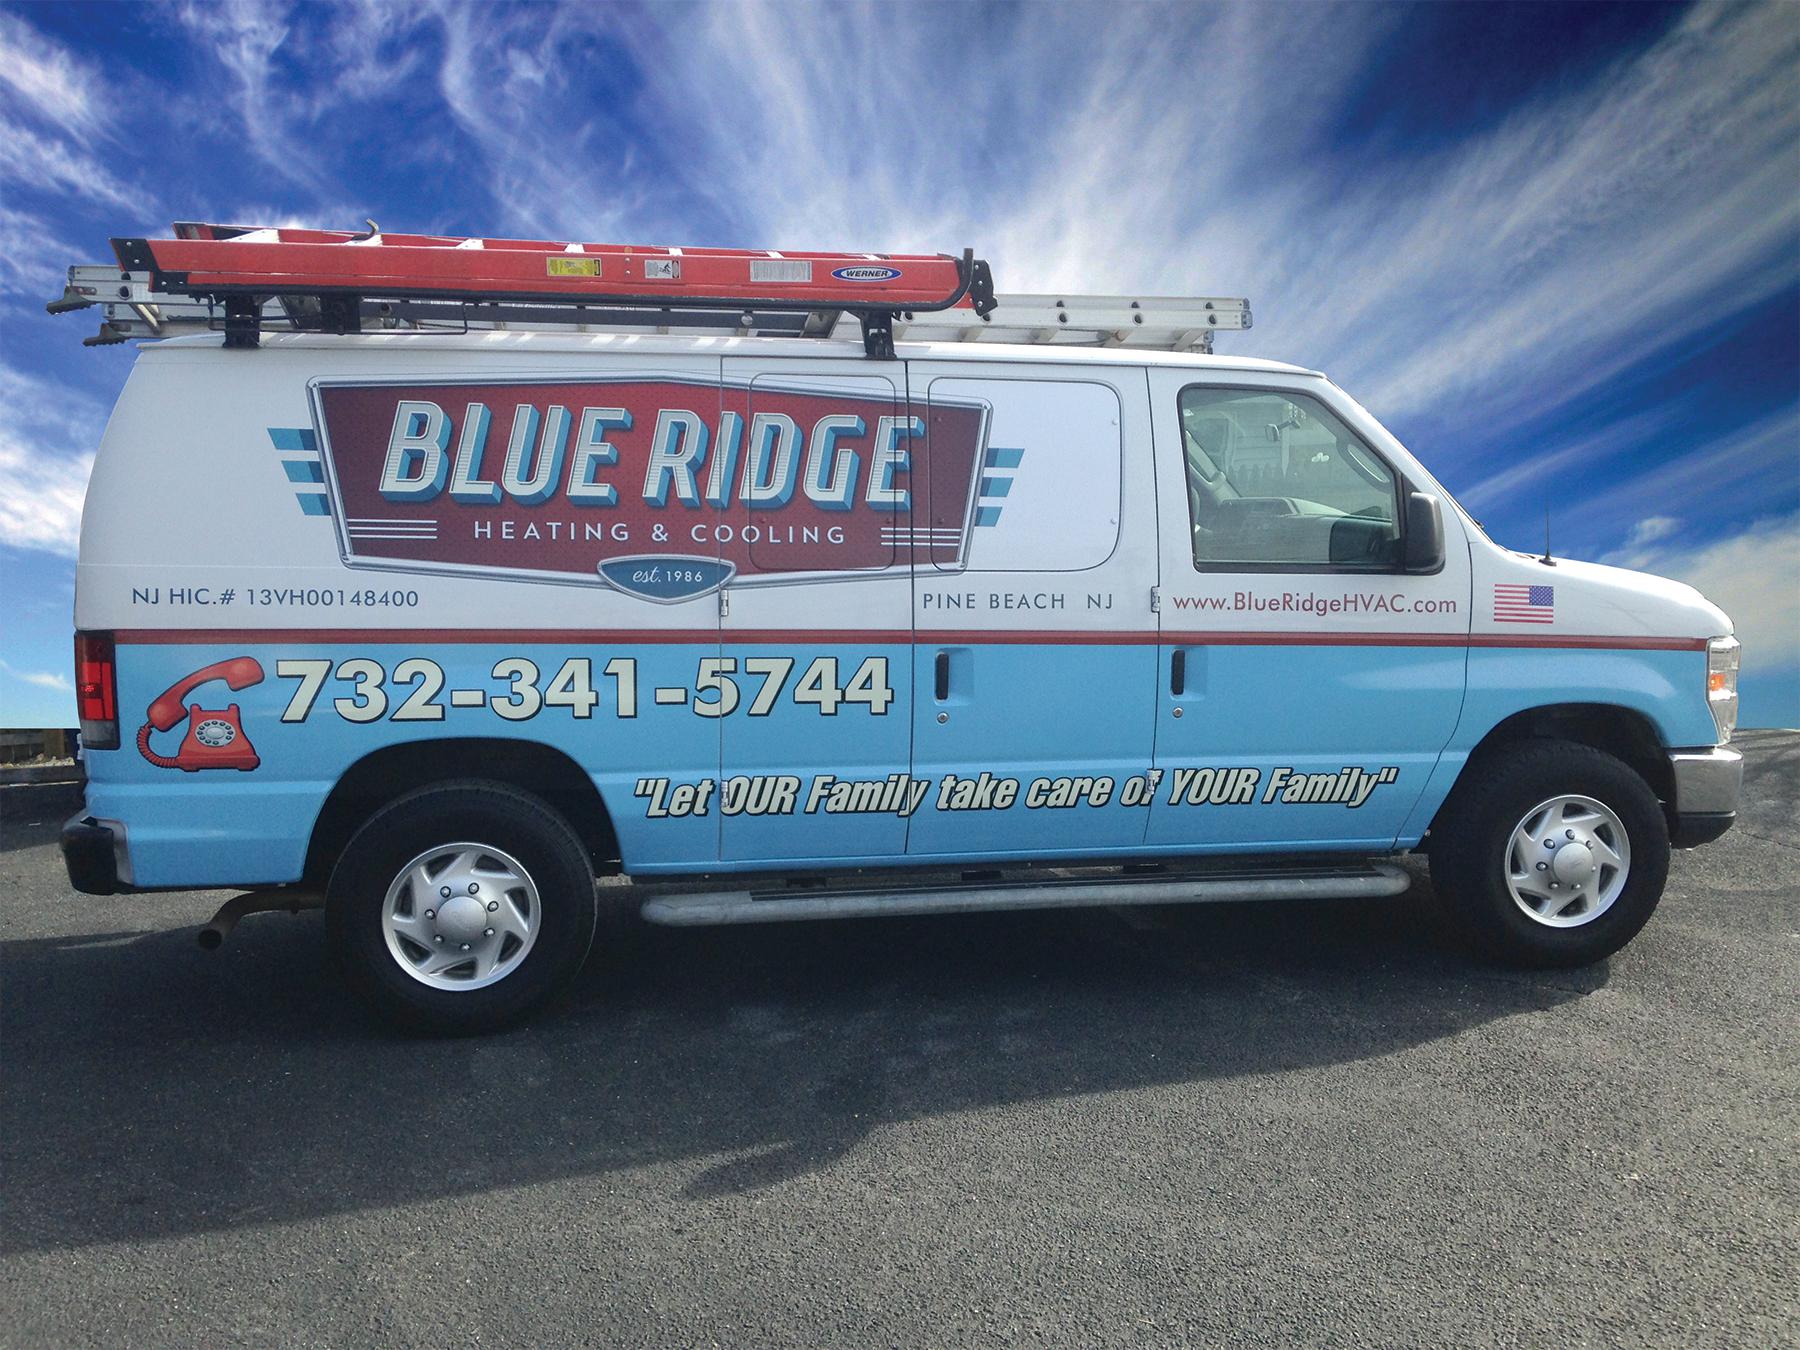 Blue Ridge Heating & Cooling 200 Grant Ave, Pine Beach New Jersey 08741